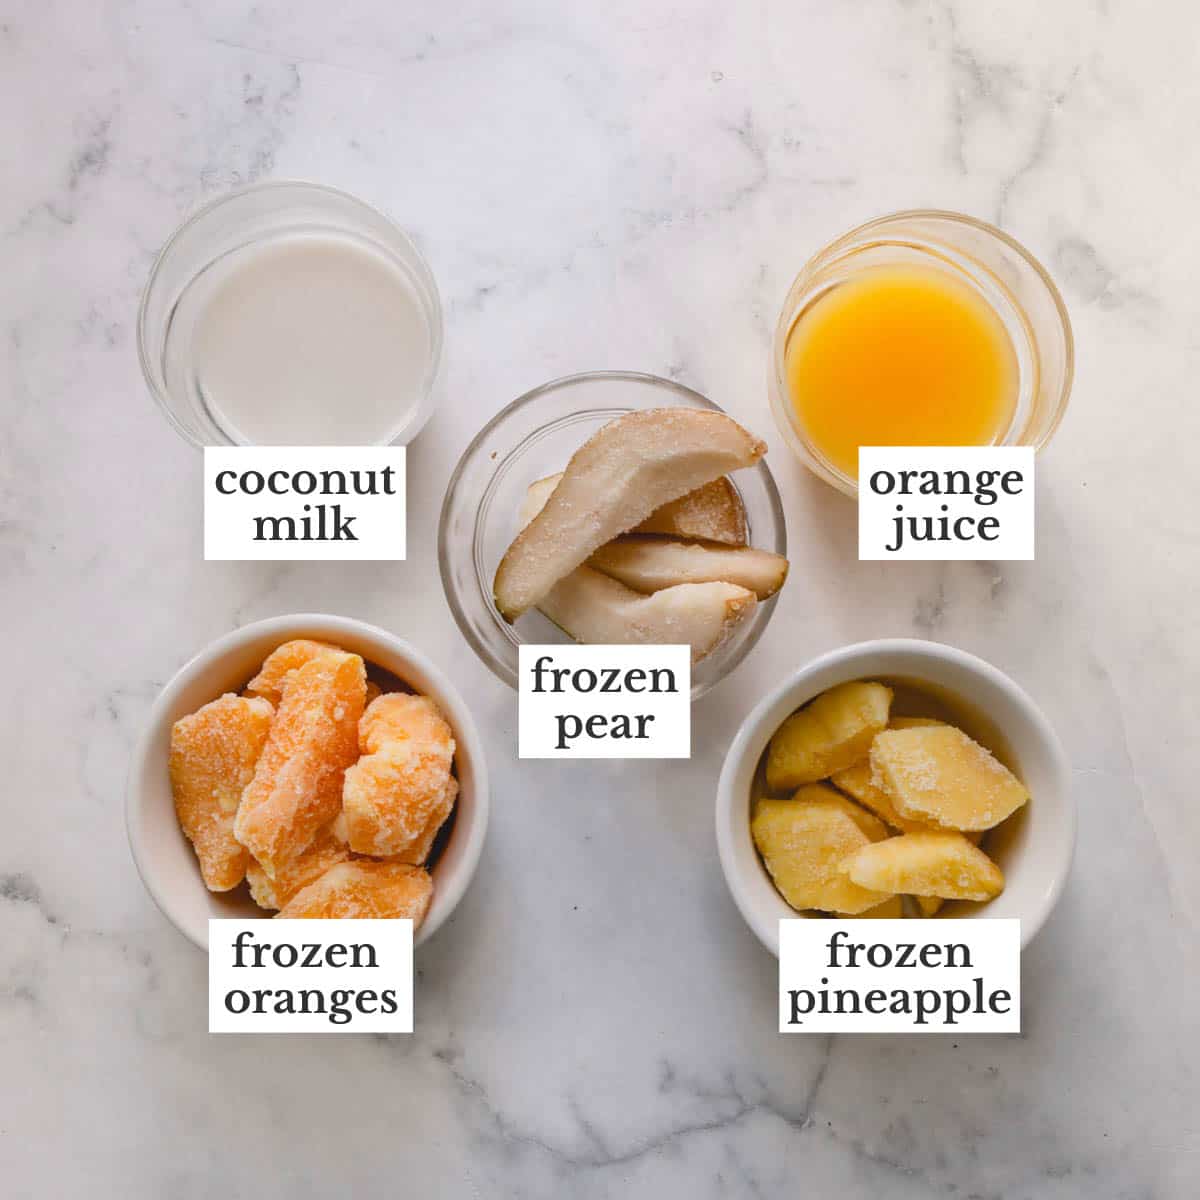 orange juice, pear, coconut milk, oranges, and pineapple, 